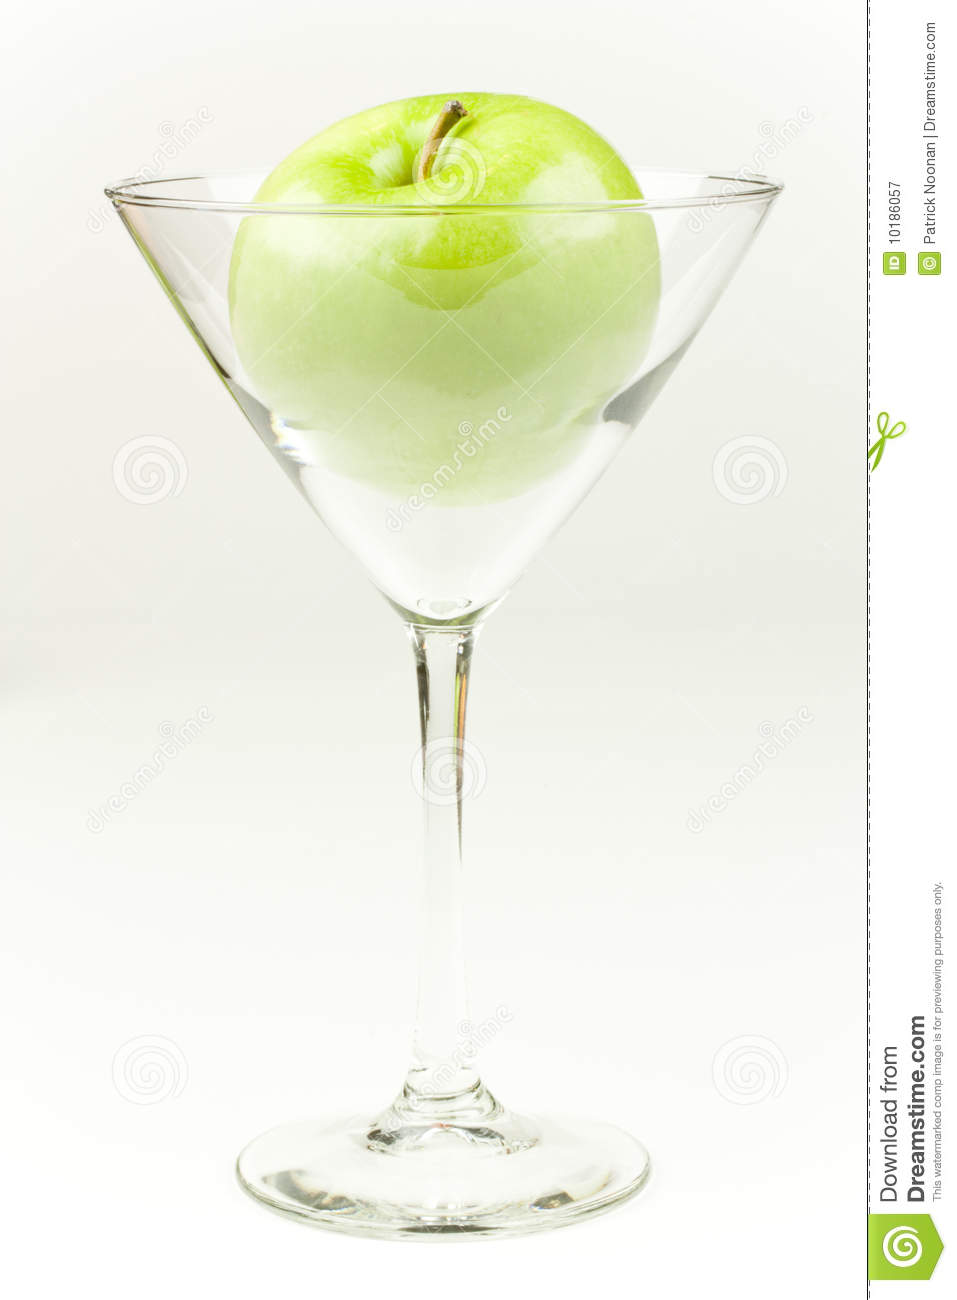 Apple Martini Royalty Free Stock Photography   Image  10186057